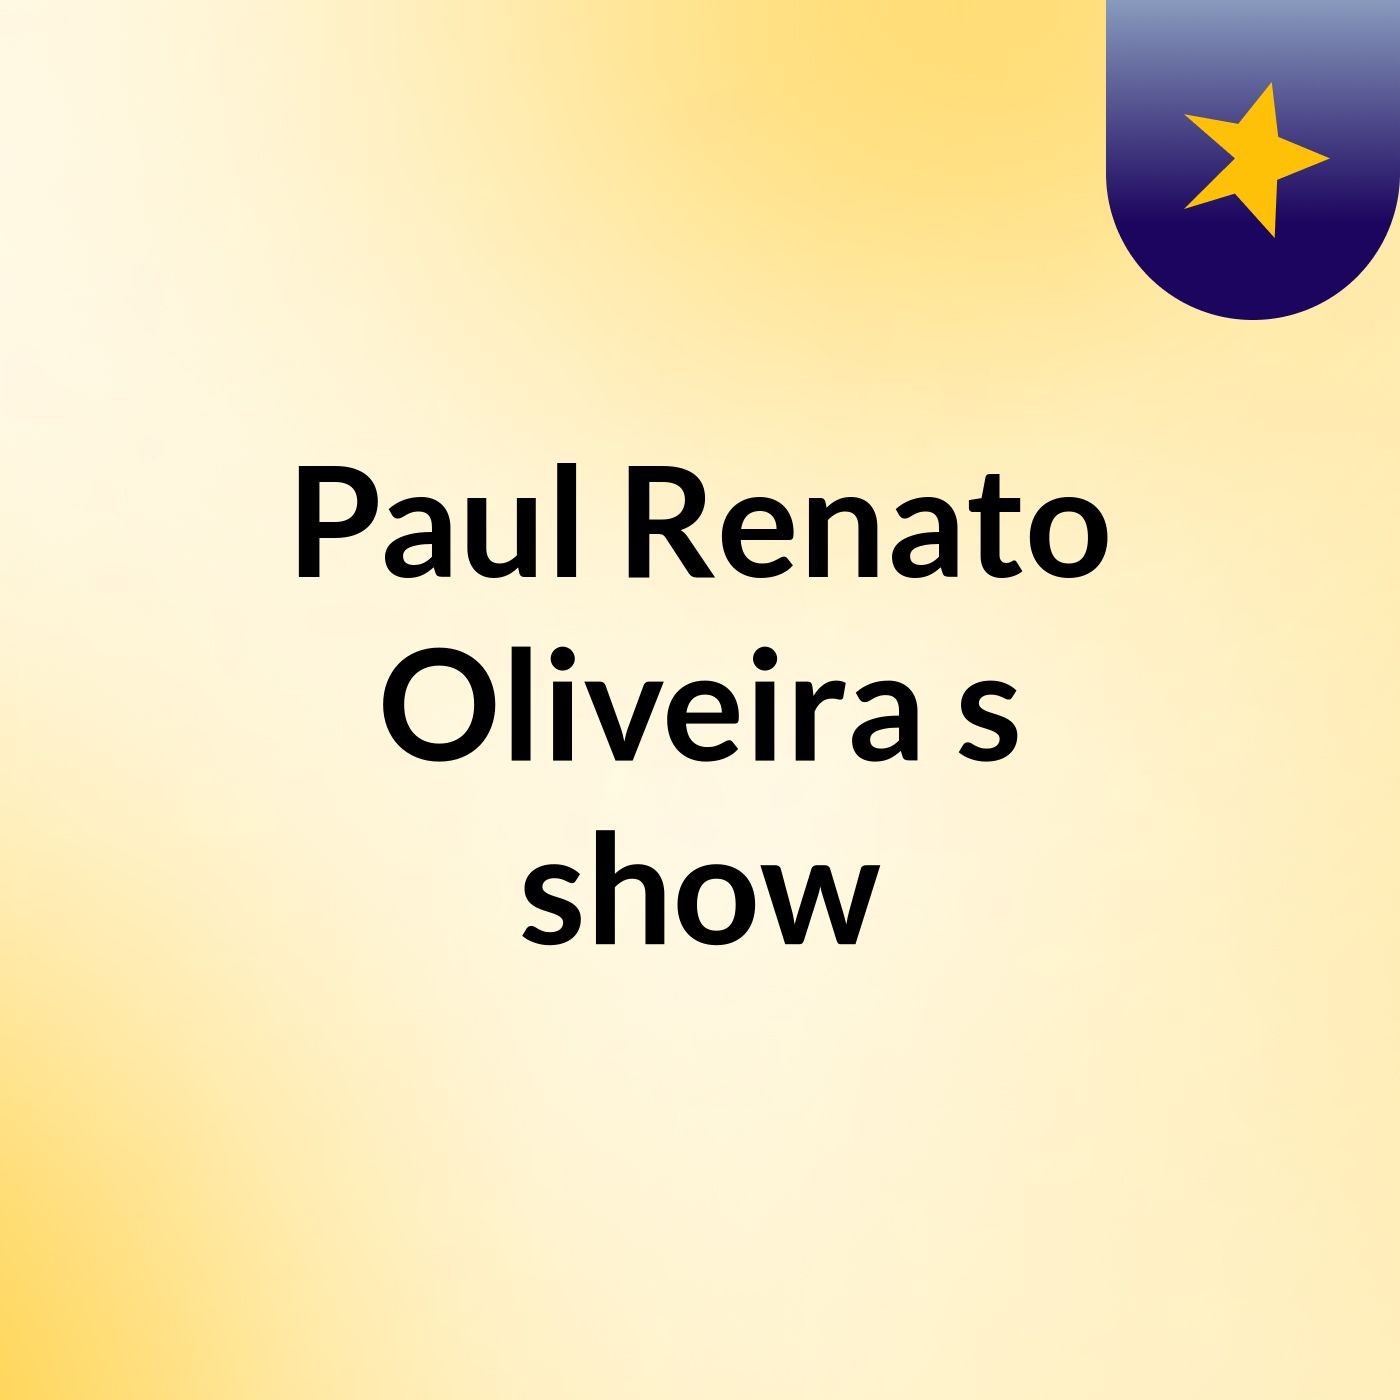 Paul Renato Oliveira's show